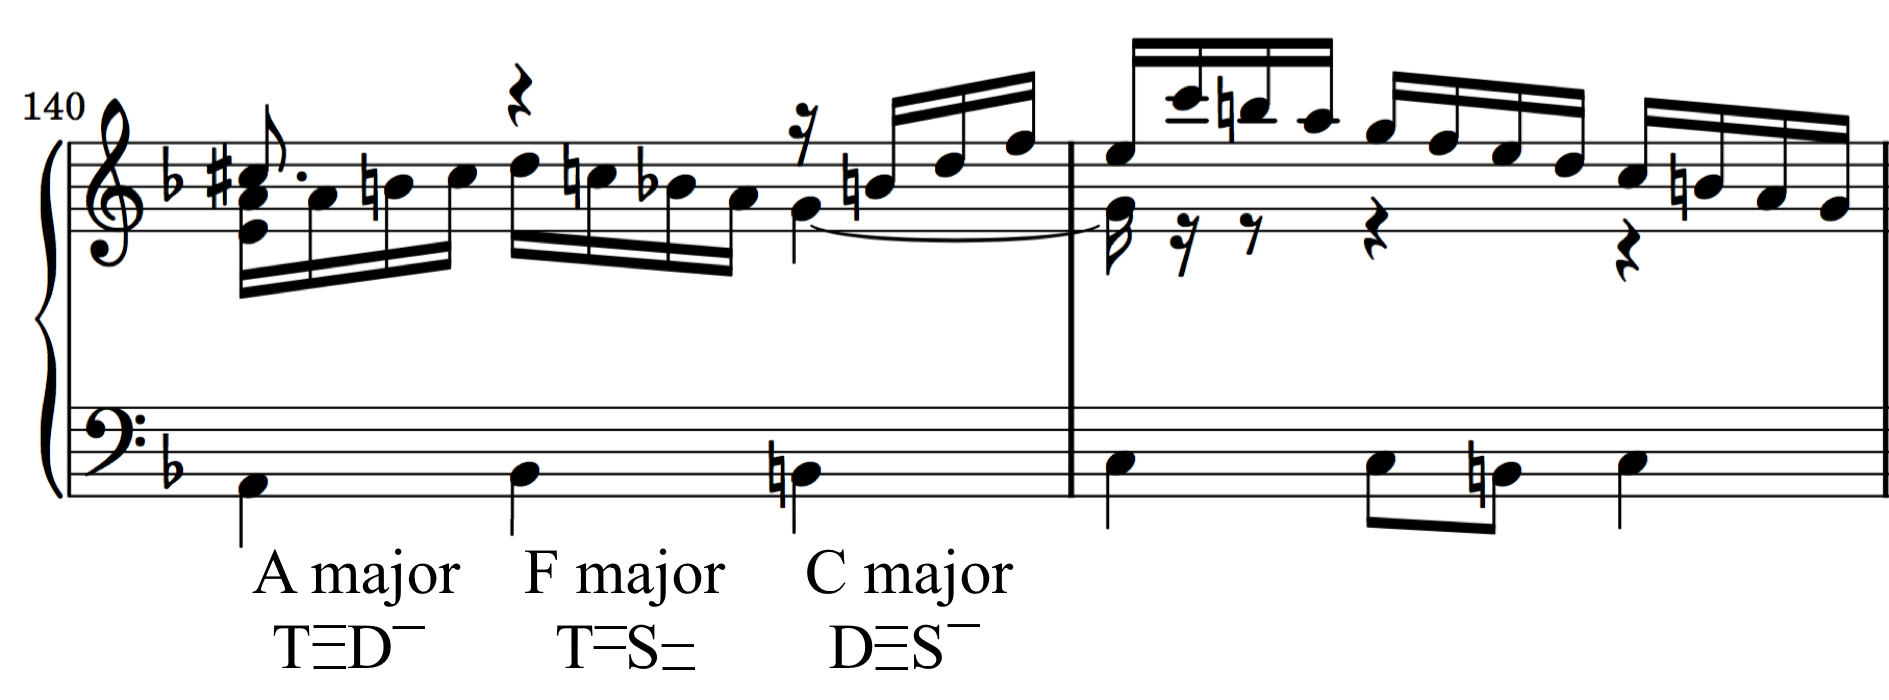 J. S. Bach, Chromatic Fugue (BWV 903), bars 140 and 141